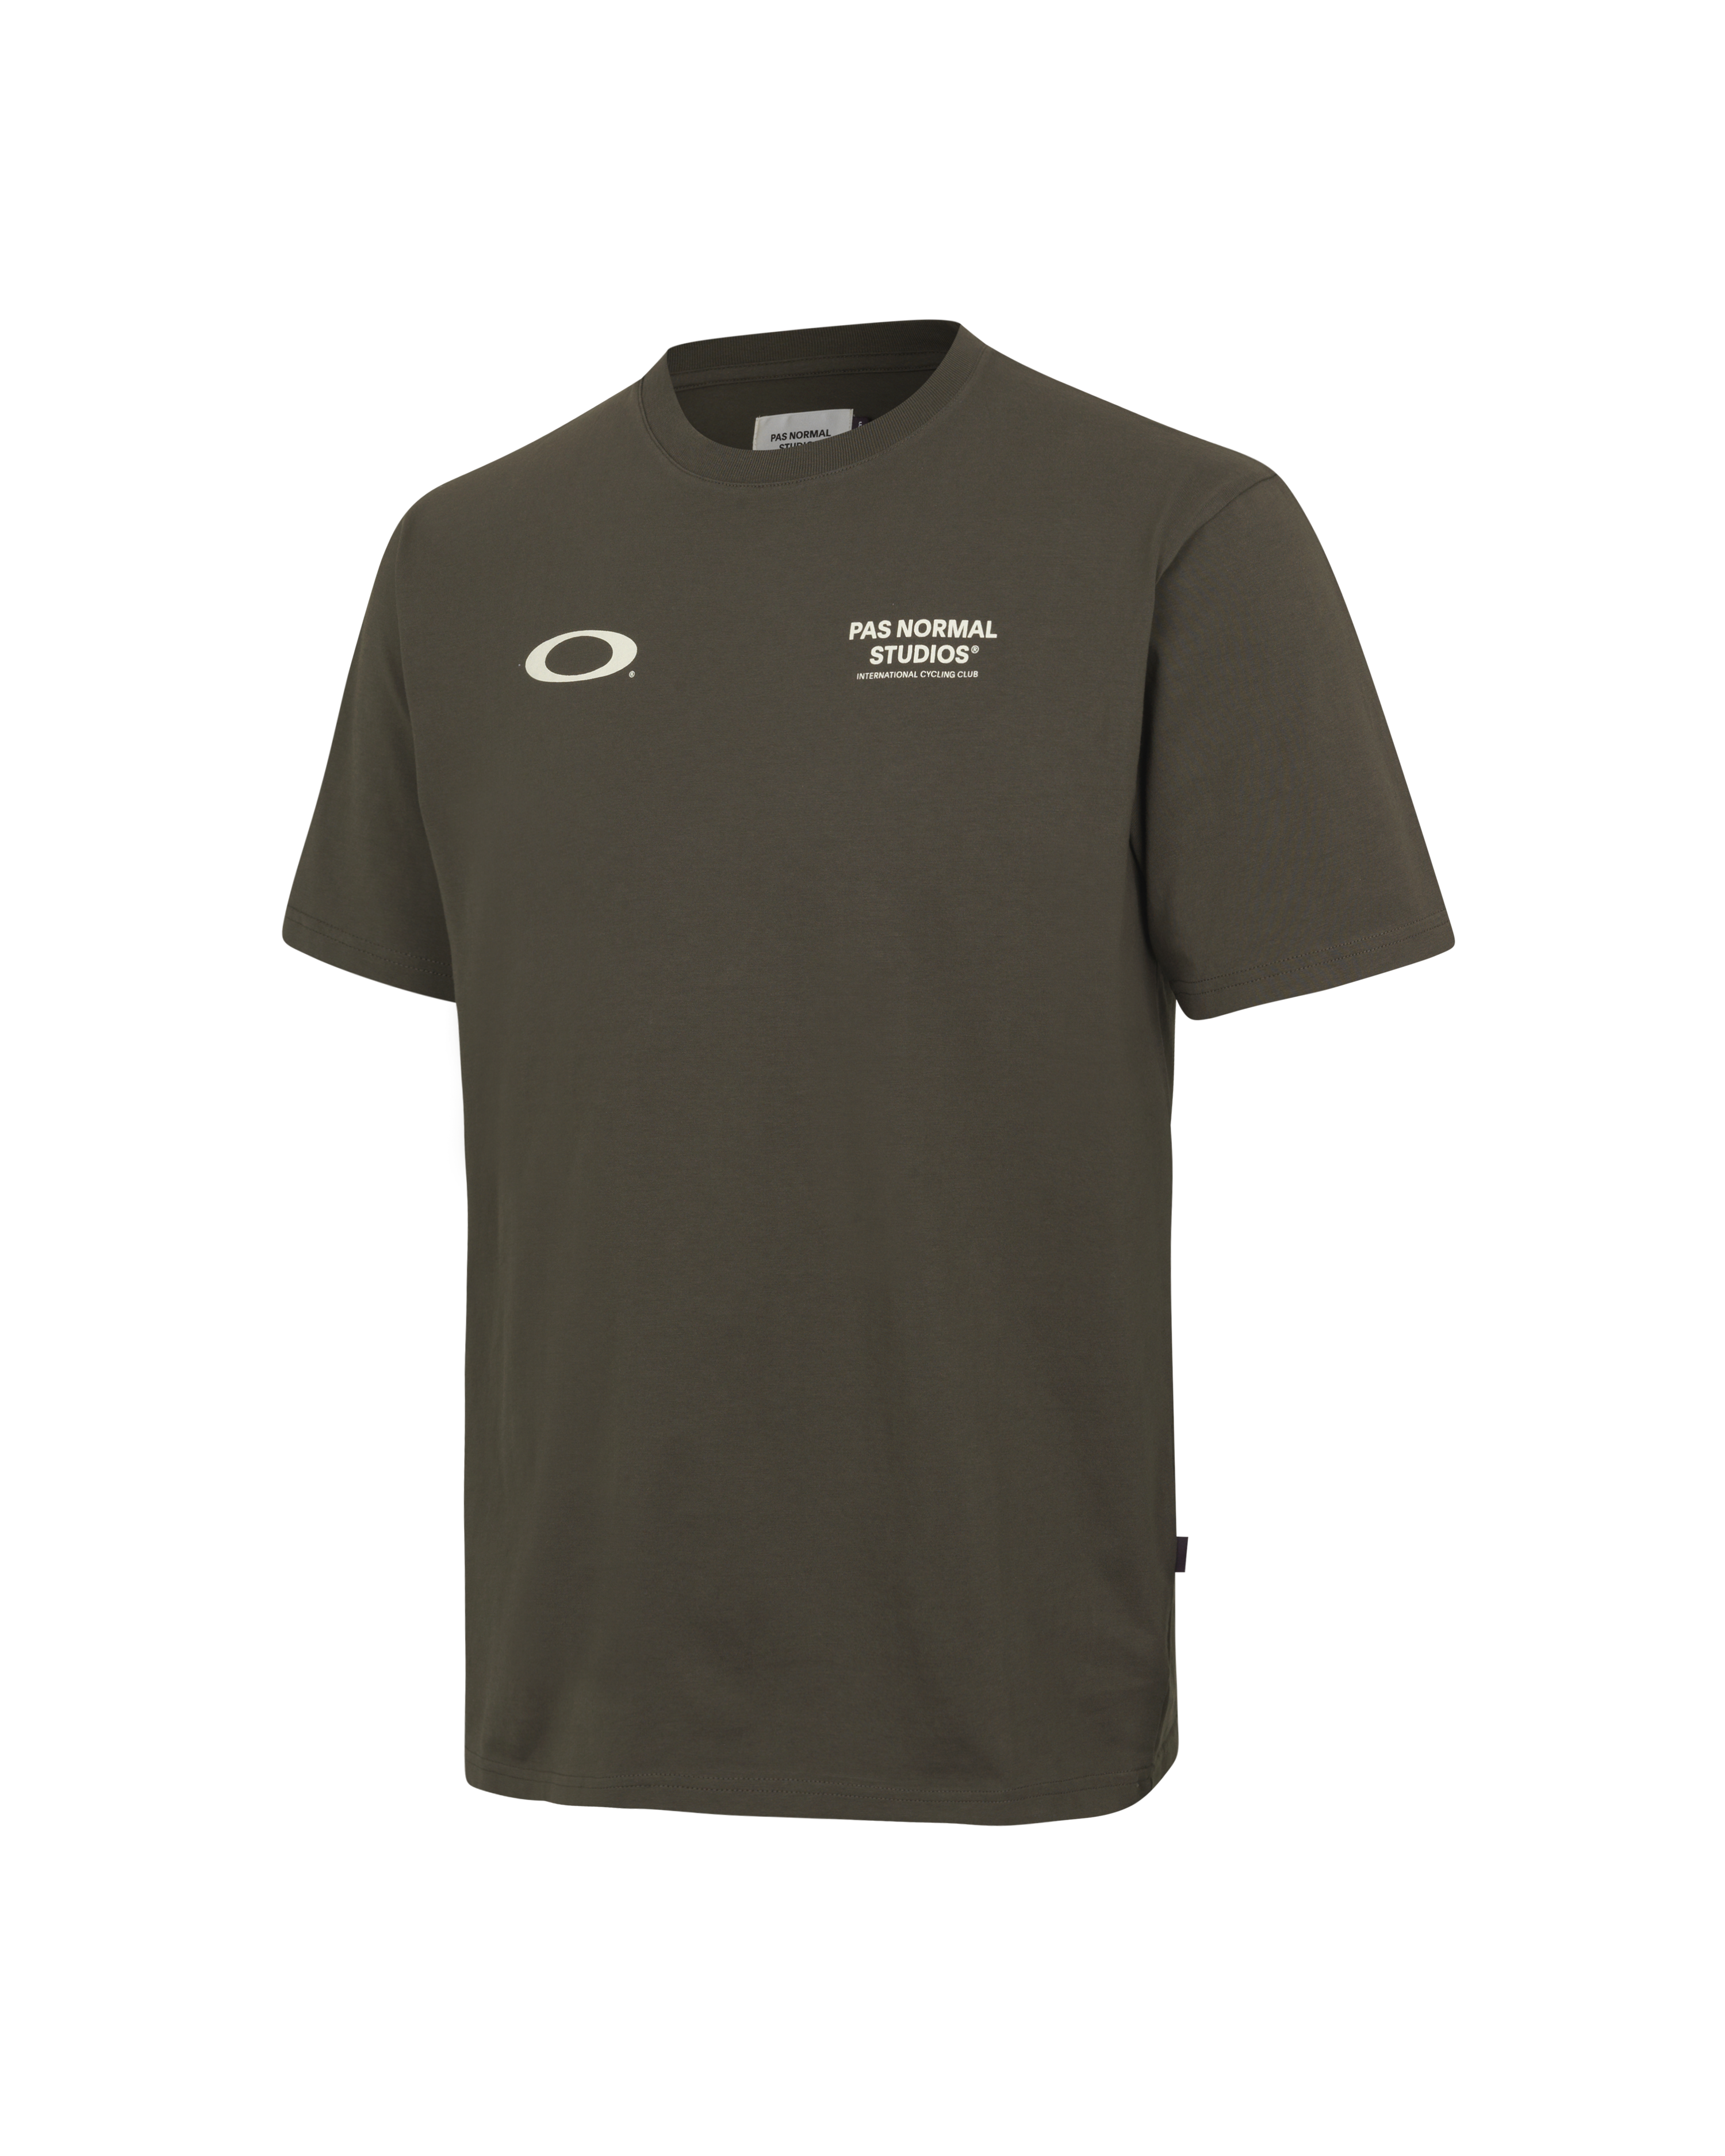 Oakley x Pas Normal Studios Off-Race T-Shirt - Black Olive - Pas Normal Studios